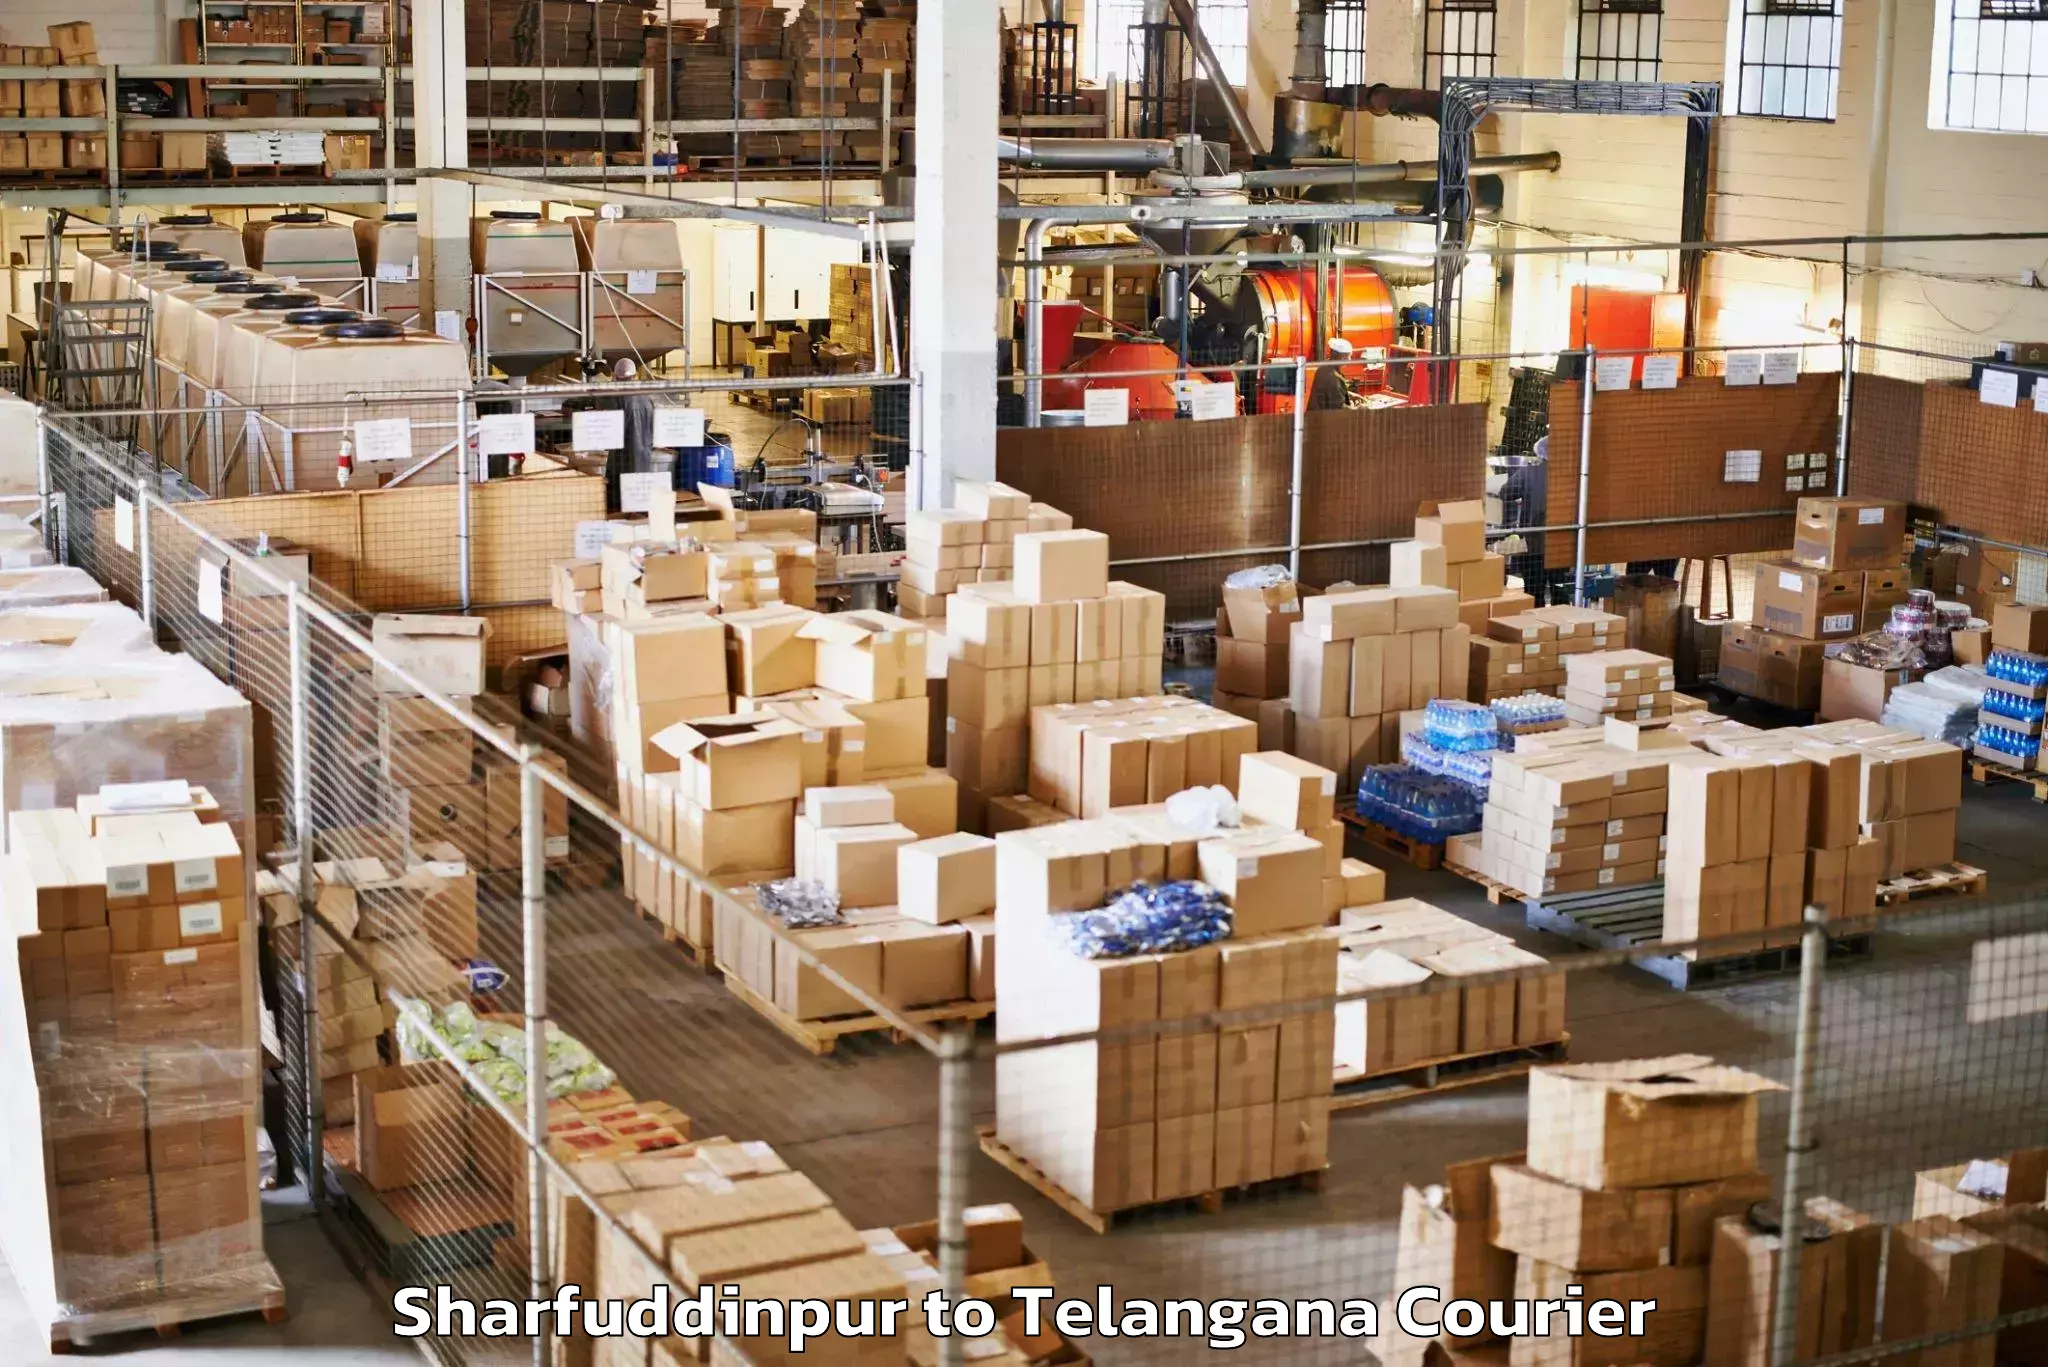 Baggage transport innovation Sharfuddinpur to Patancheru